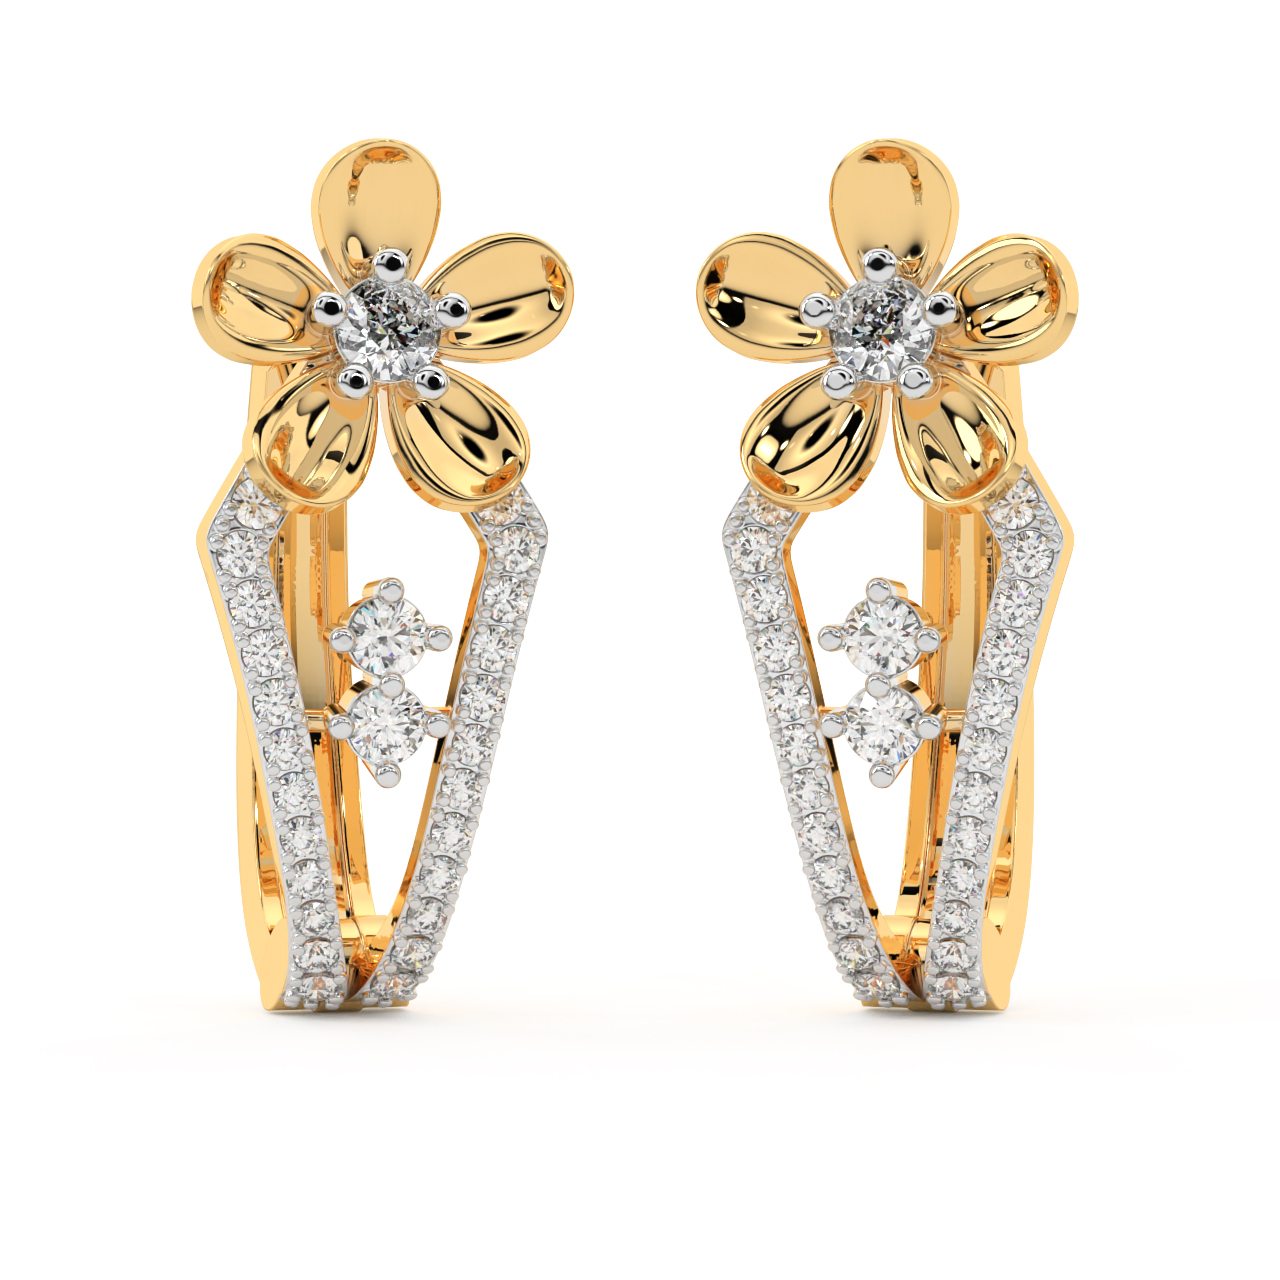 A Lily Link Diamond Earrings